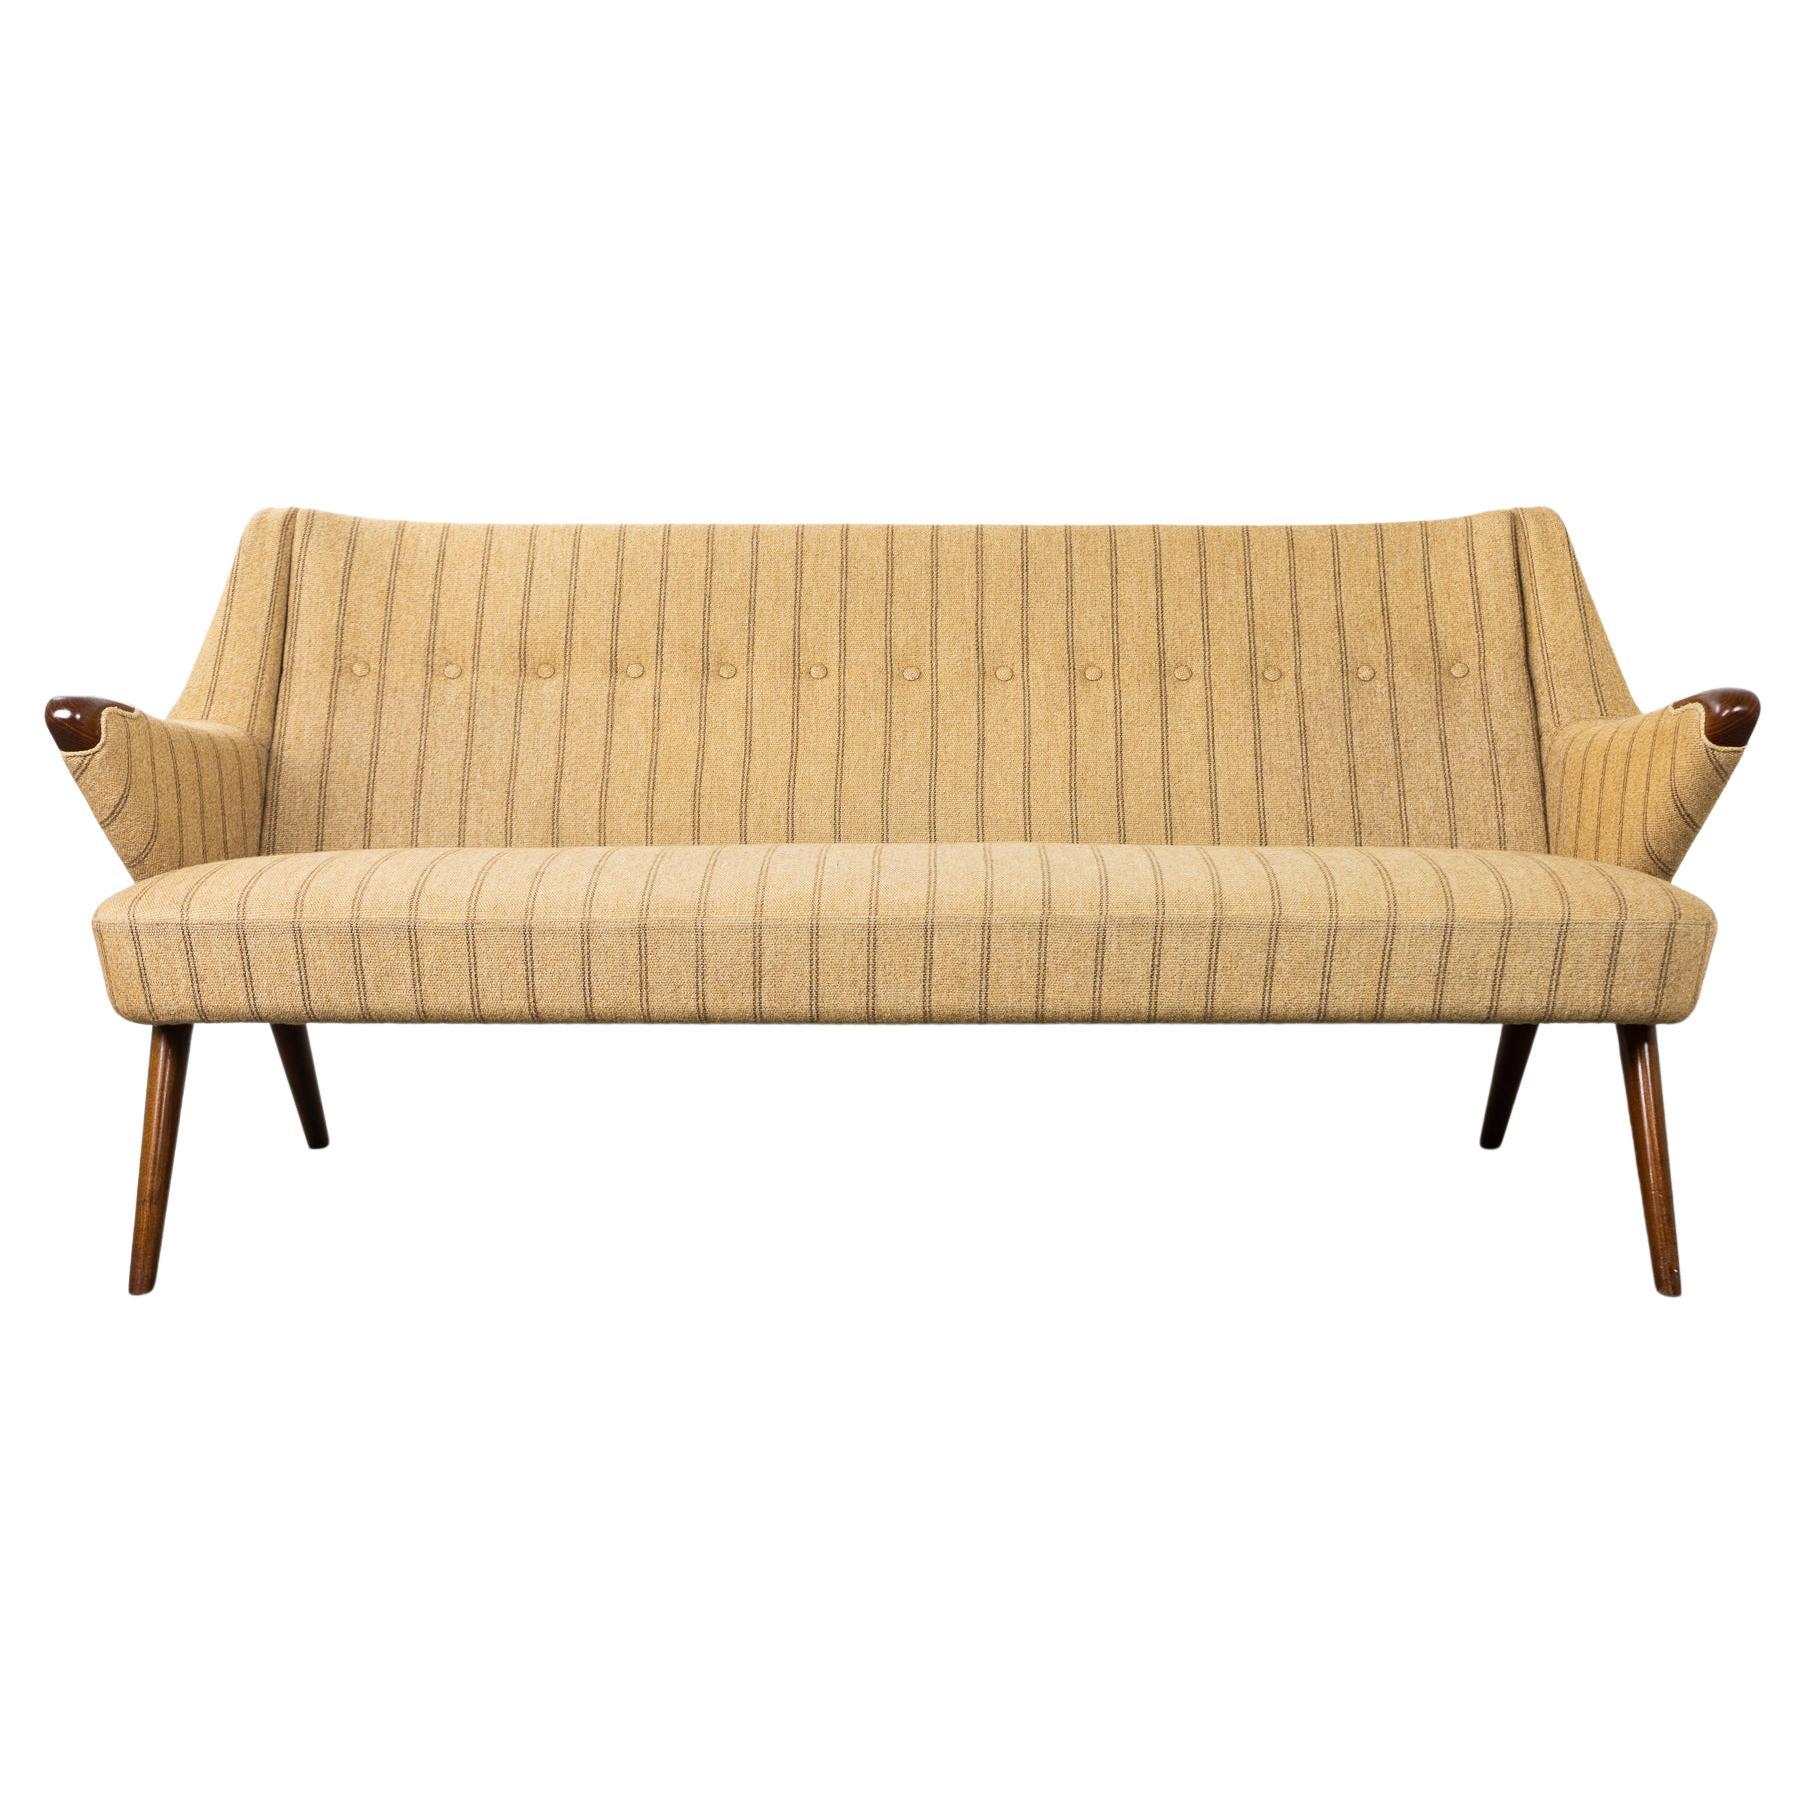 Danish Mid-Century Modern Wool and Teak Sofa For Sale